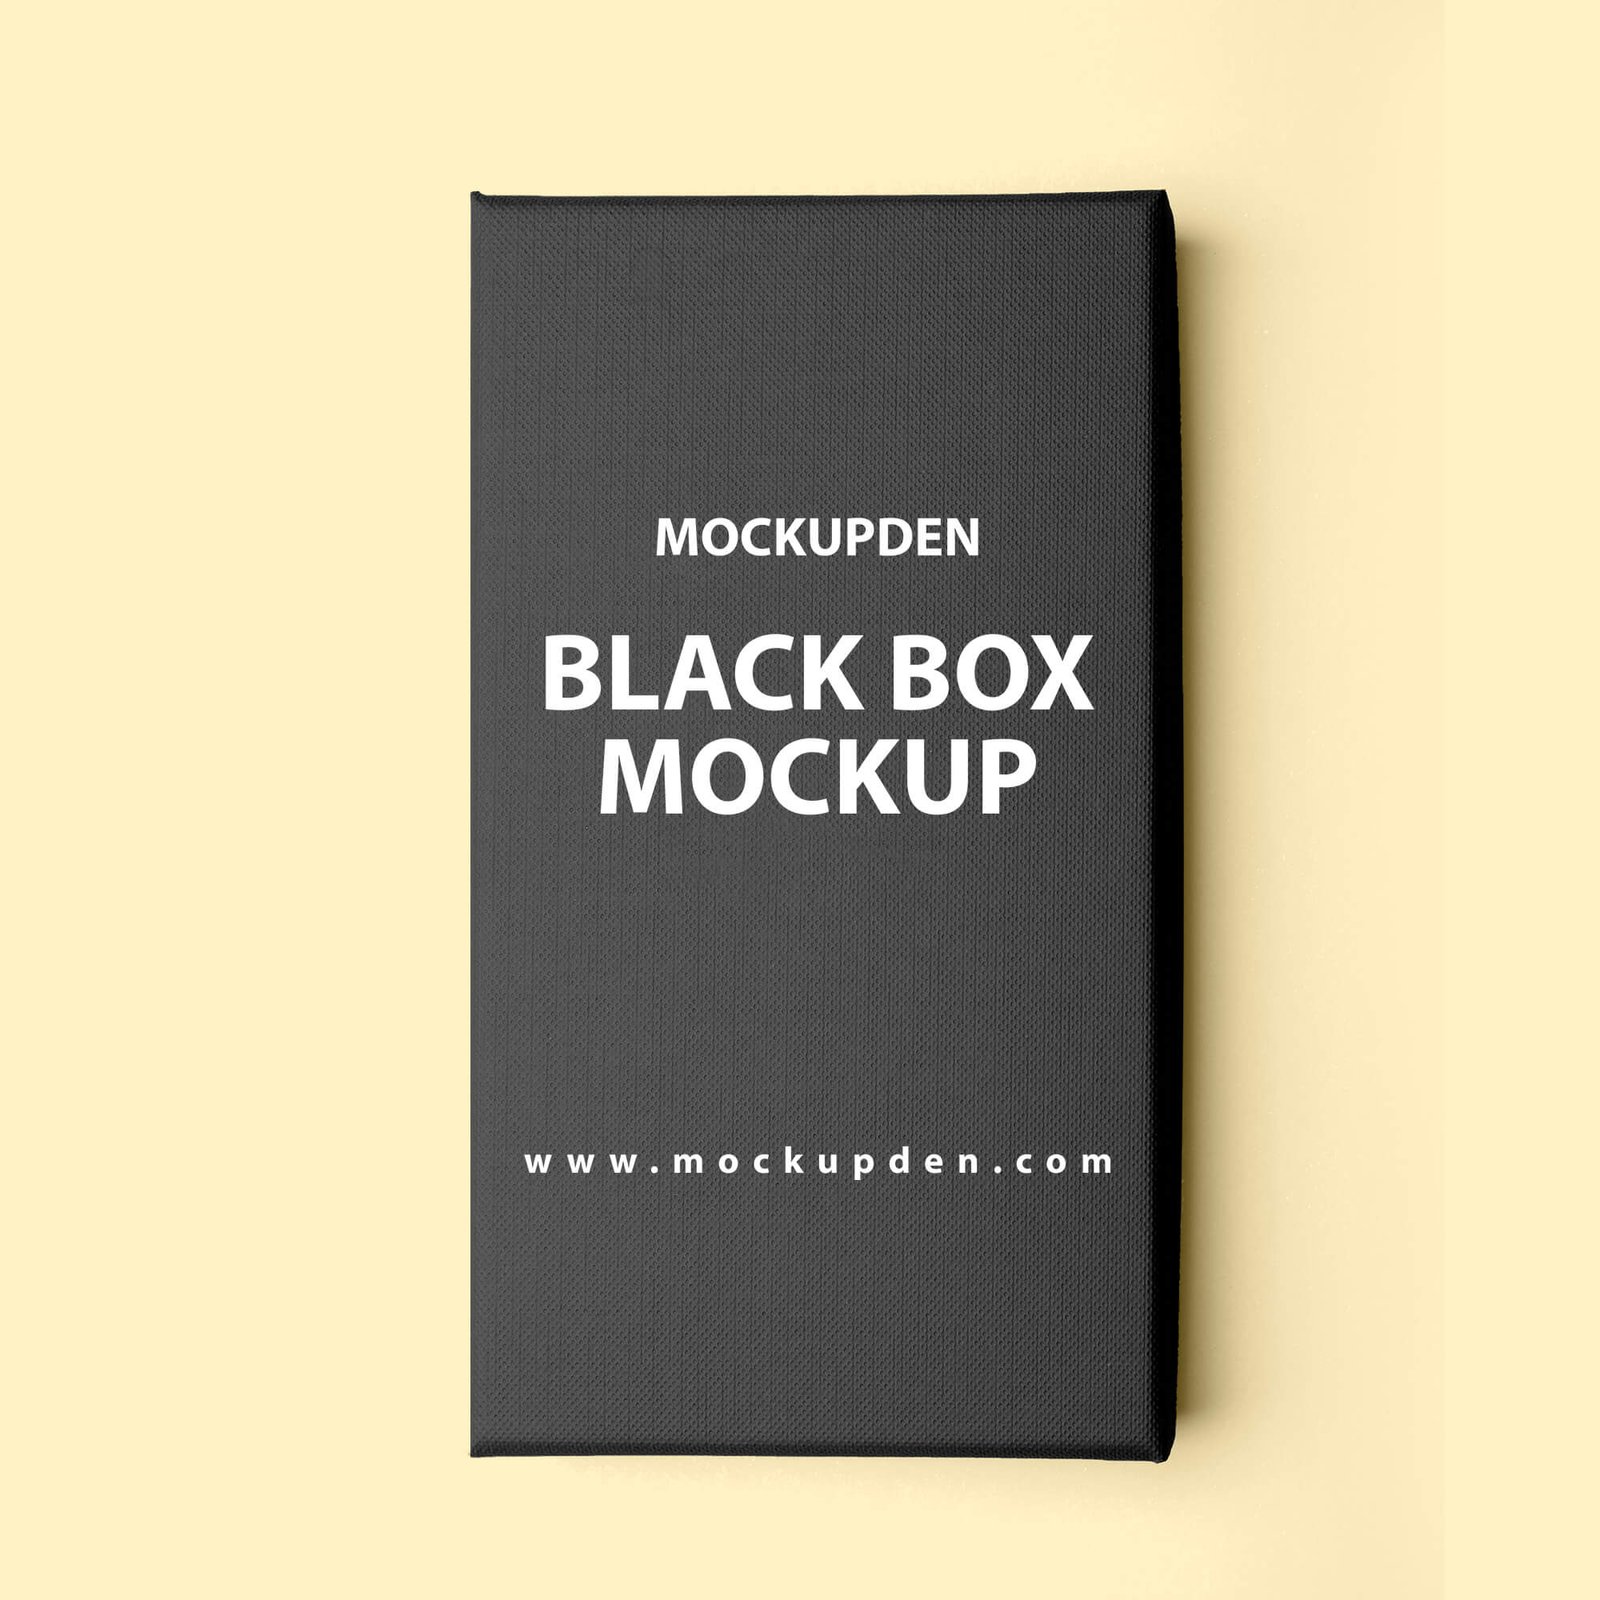 Design Free Black Box Mockup PSD Template